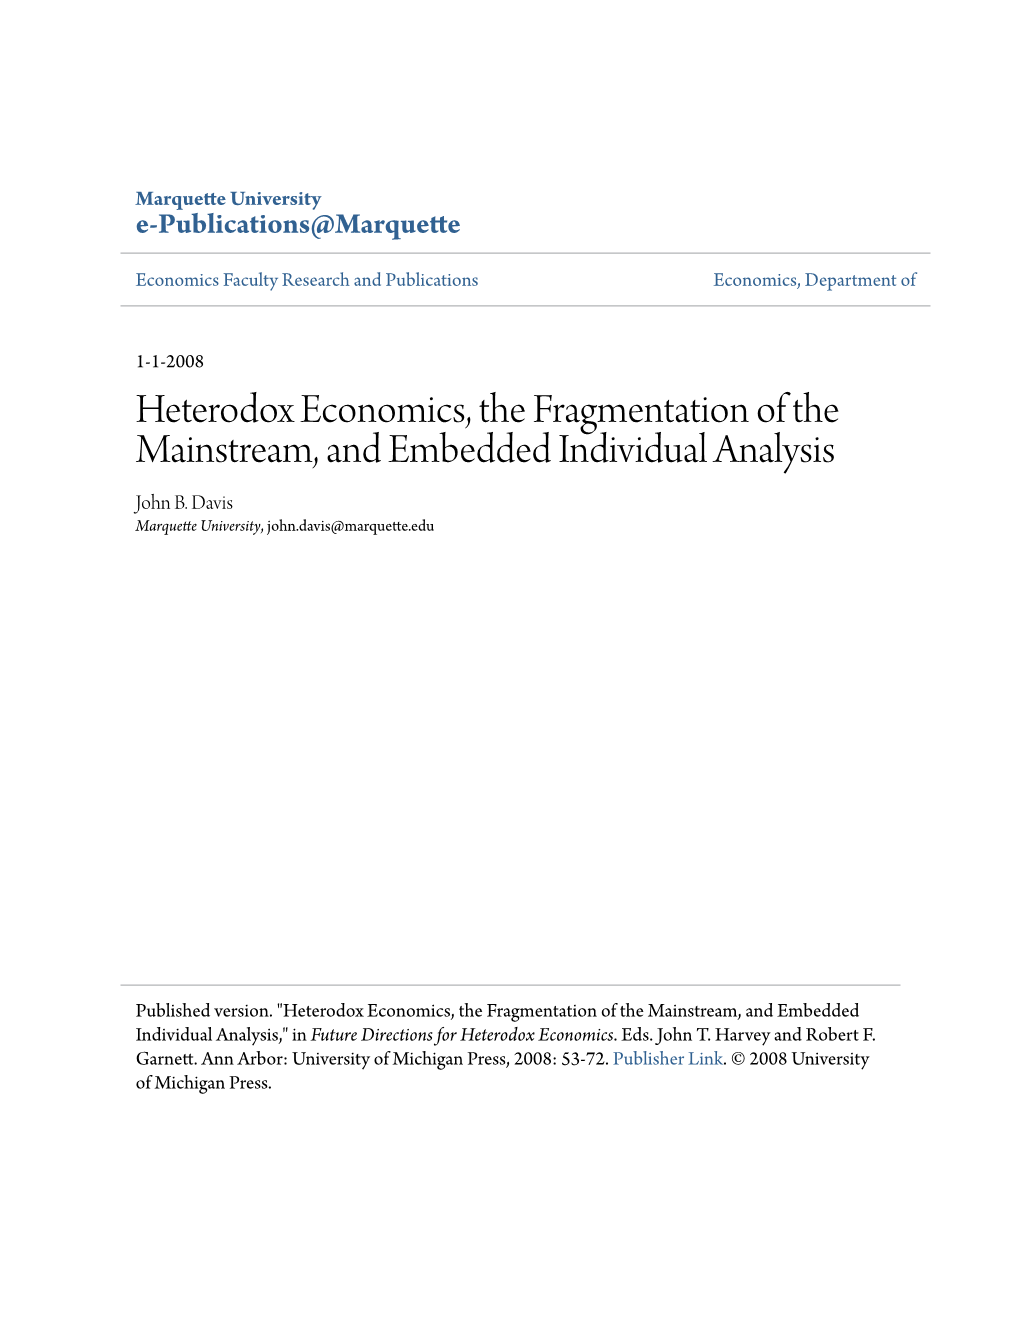 Heterodox Economics, the Fragmentation of the Mainstream, and Embedded Individual Analysis John B